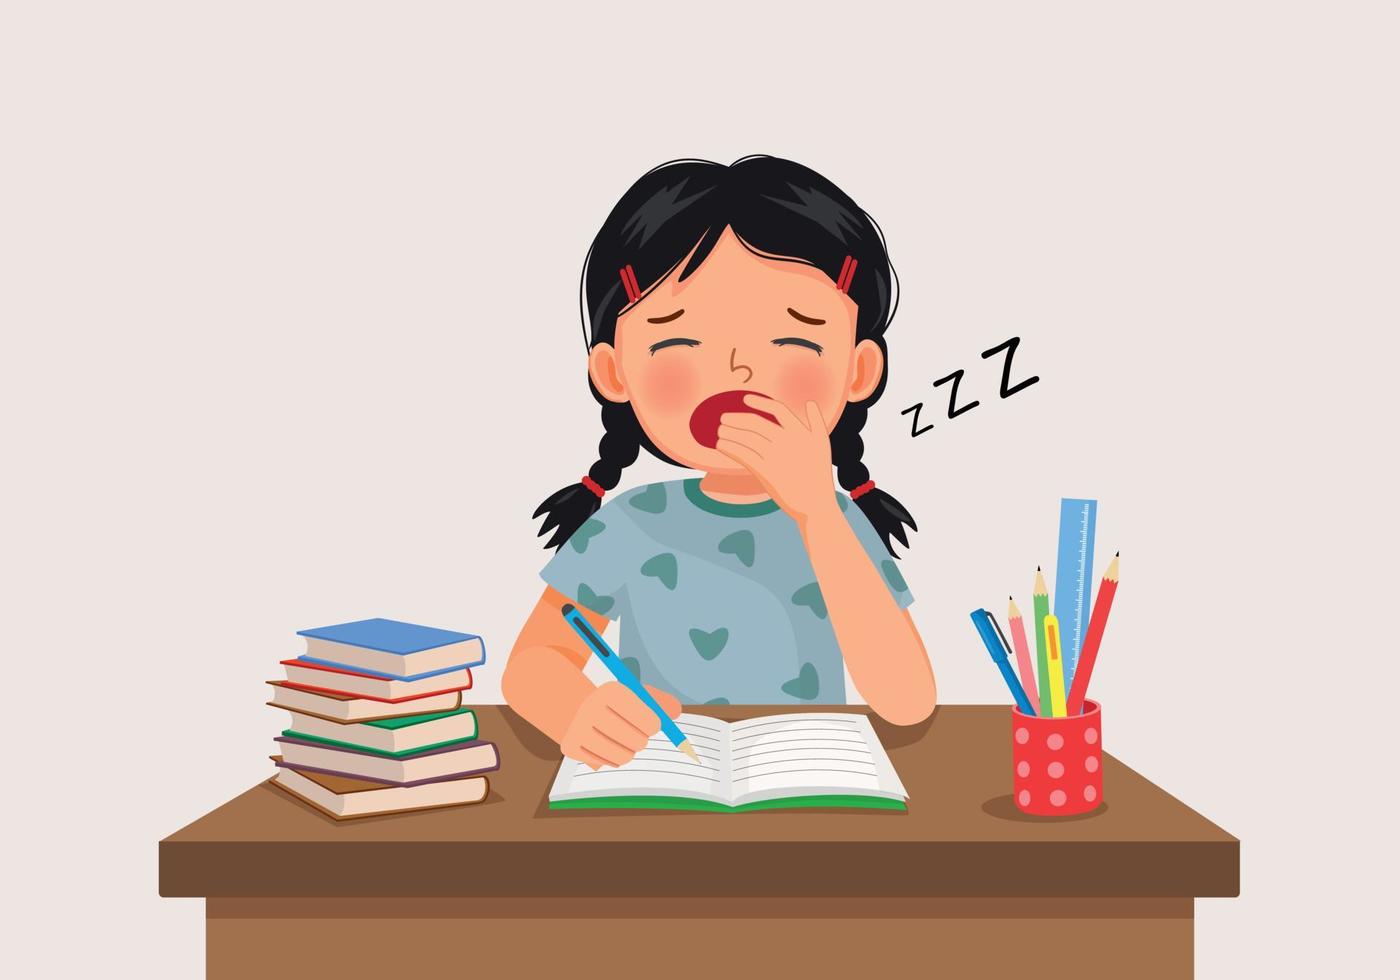 cute little girl yawning feeling sleepy while studying doing homework on the desk vector